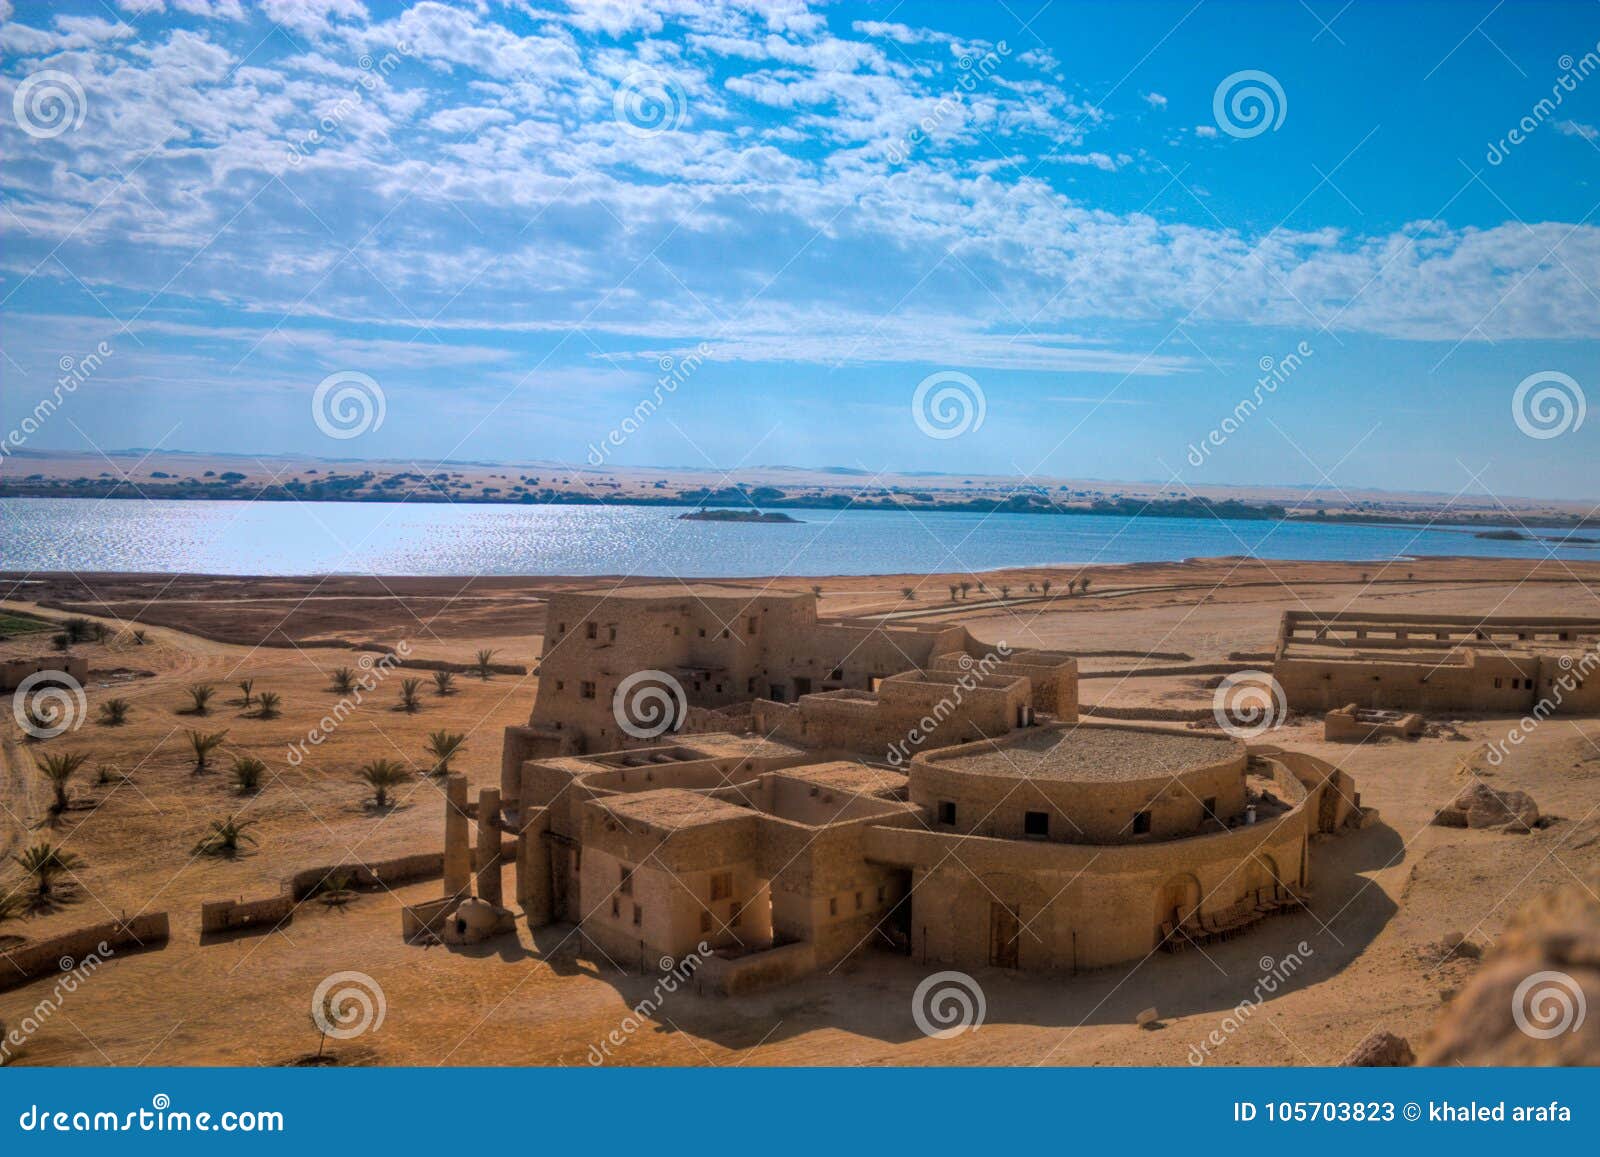 landscape from gaafar ecolodge siwa egypt